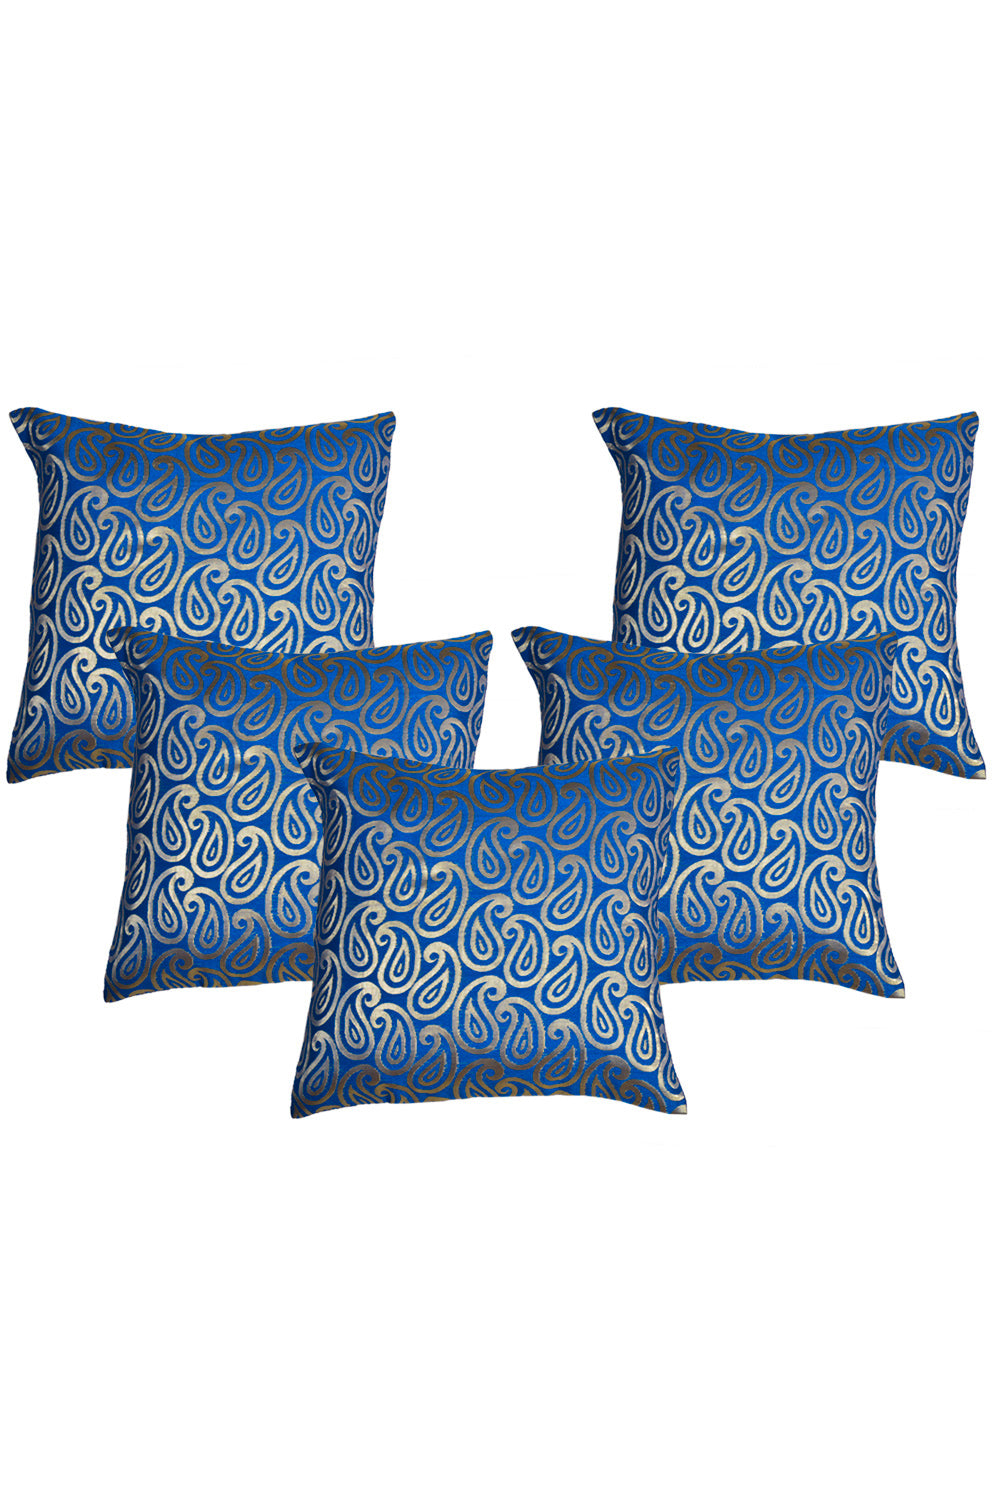 Silkfab Set 0f 5 Decorative Silk Cushion Covers (16x16) Paisley Blue - SILKFAB